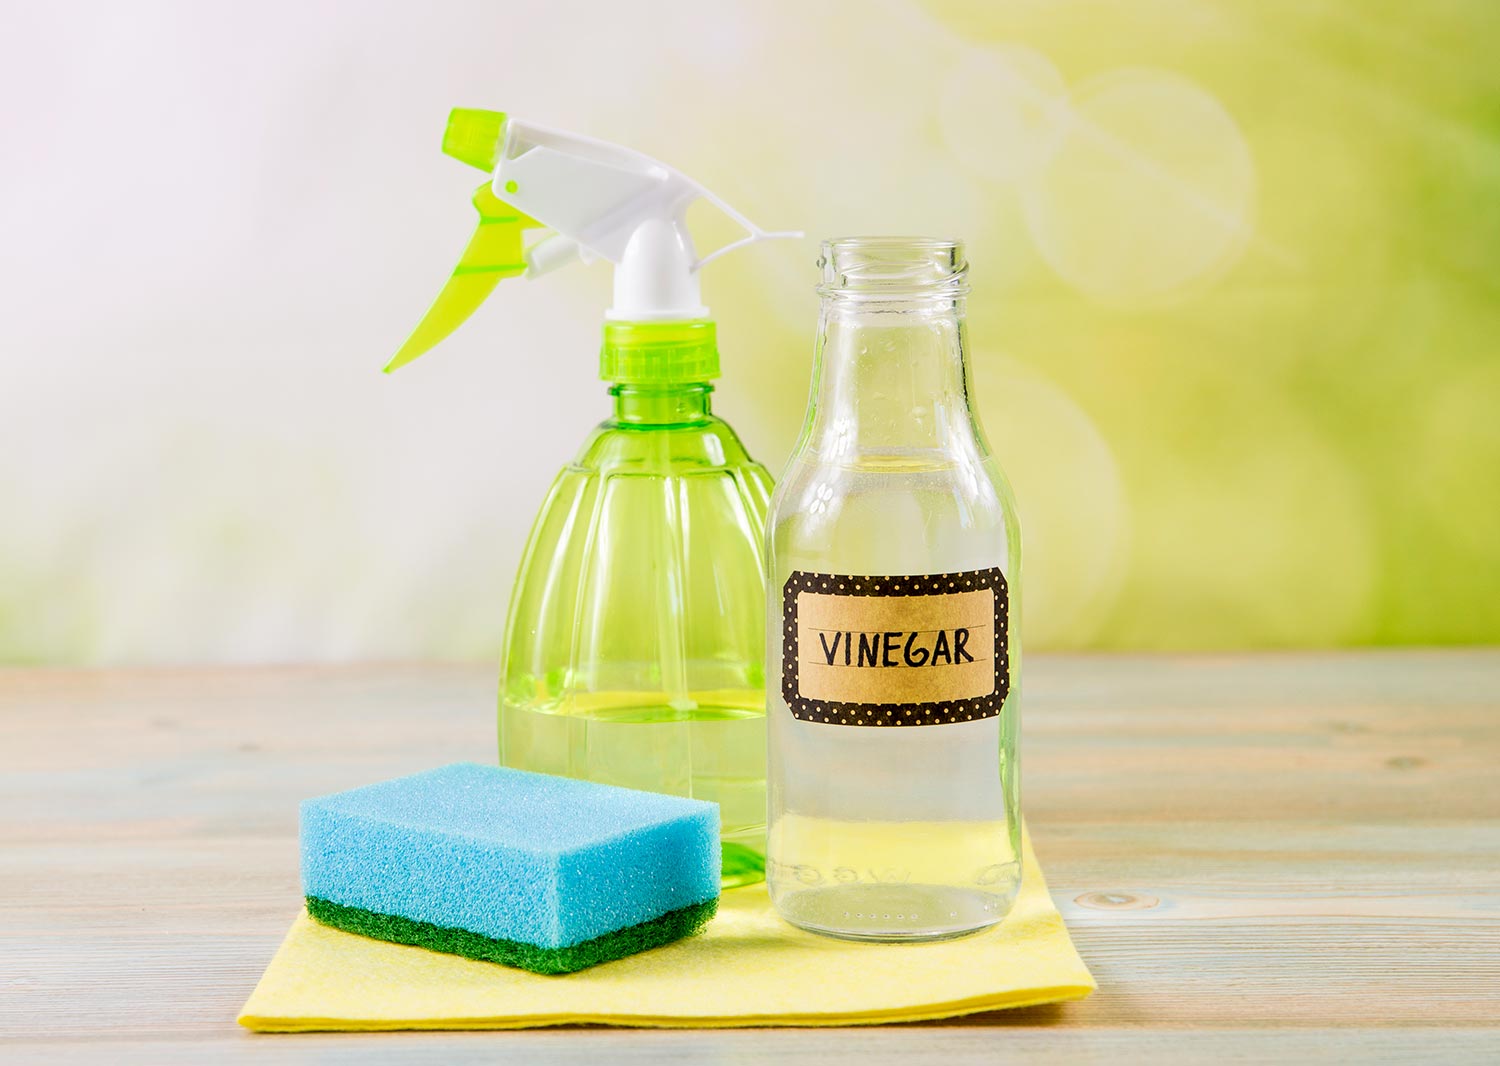 Using natural destilled white vinegar in spray bottle to remove stains